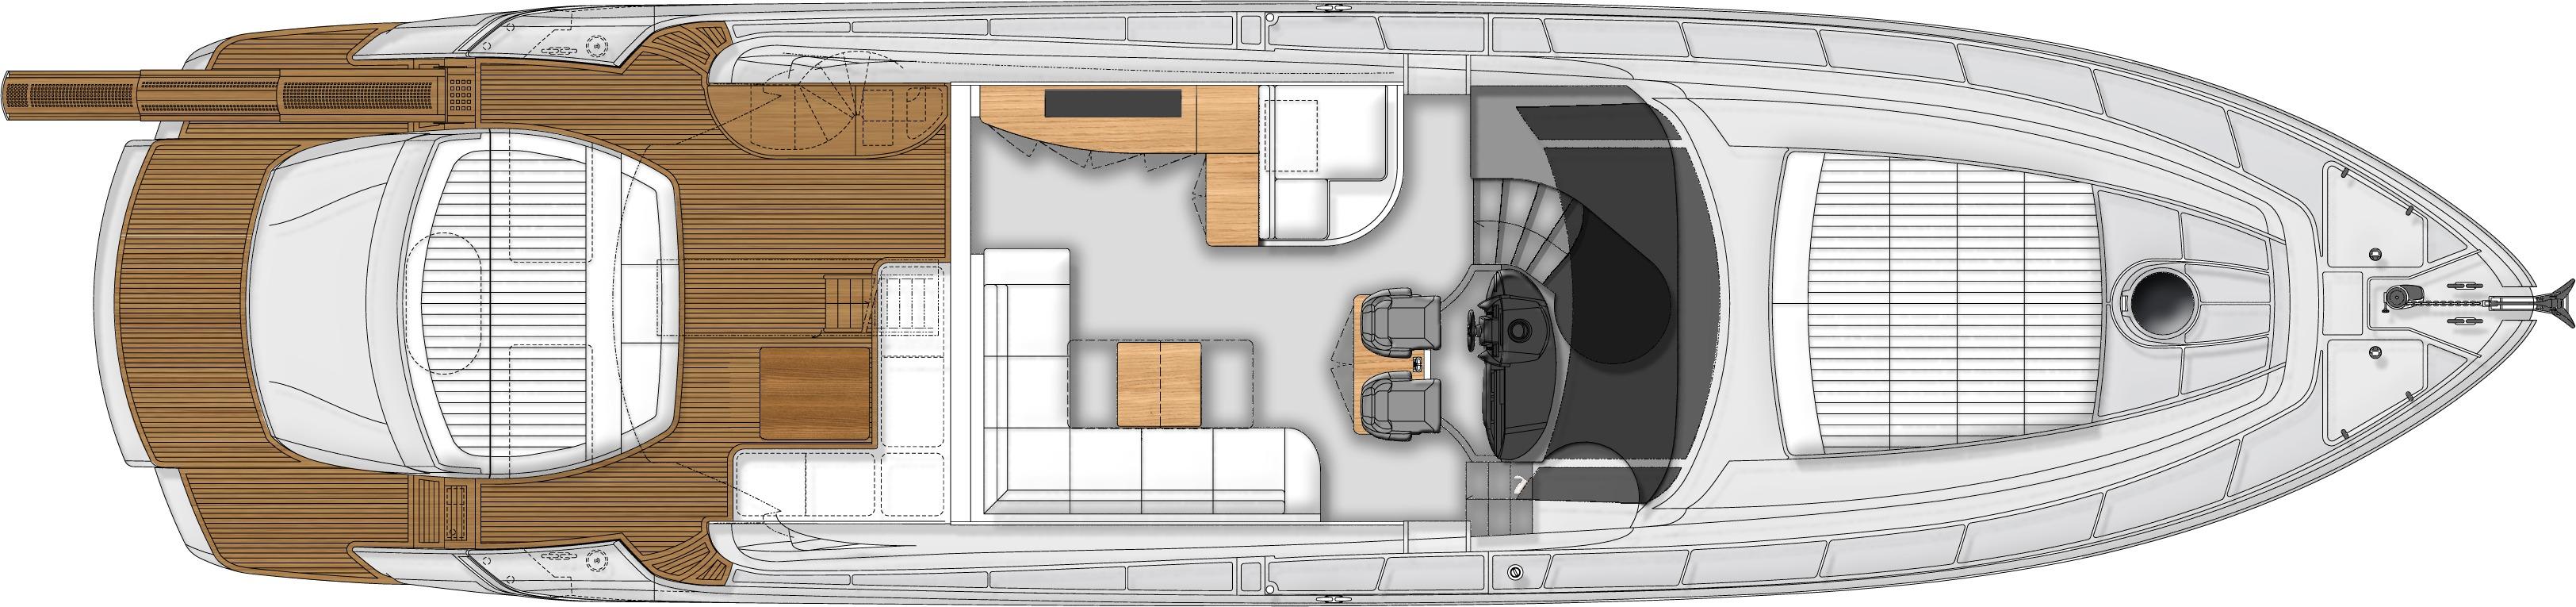 Manufacturer Provided Image: Pershing 74 Upper Deck Layout Plan